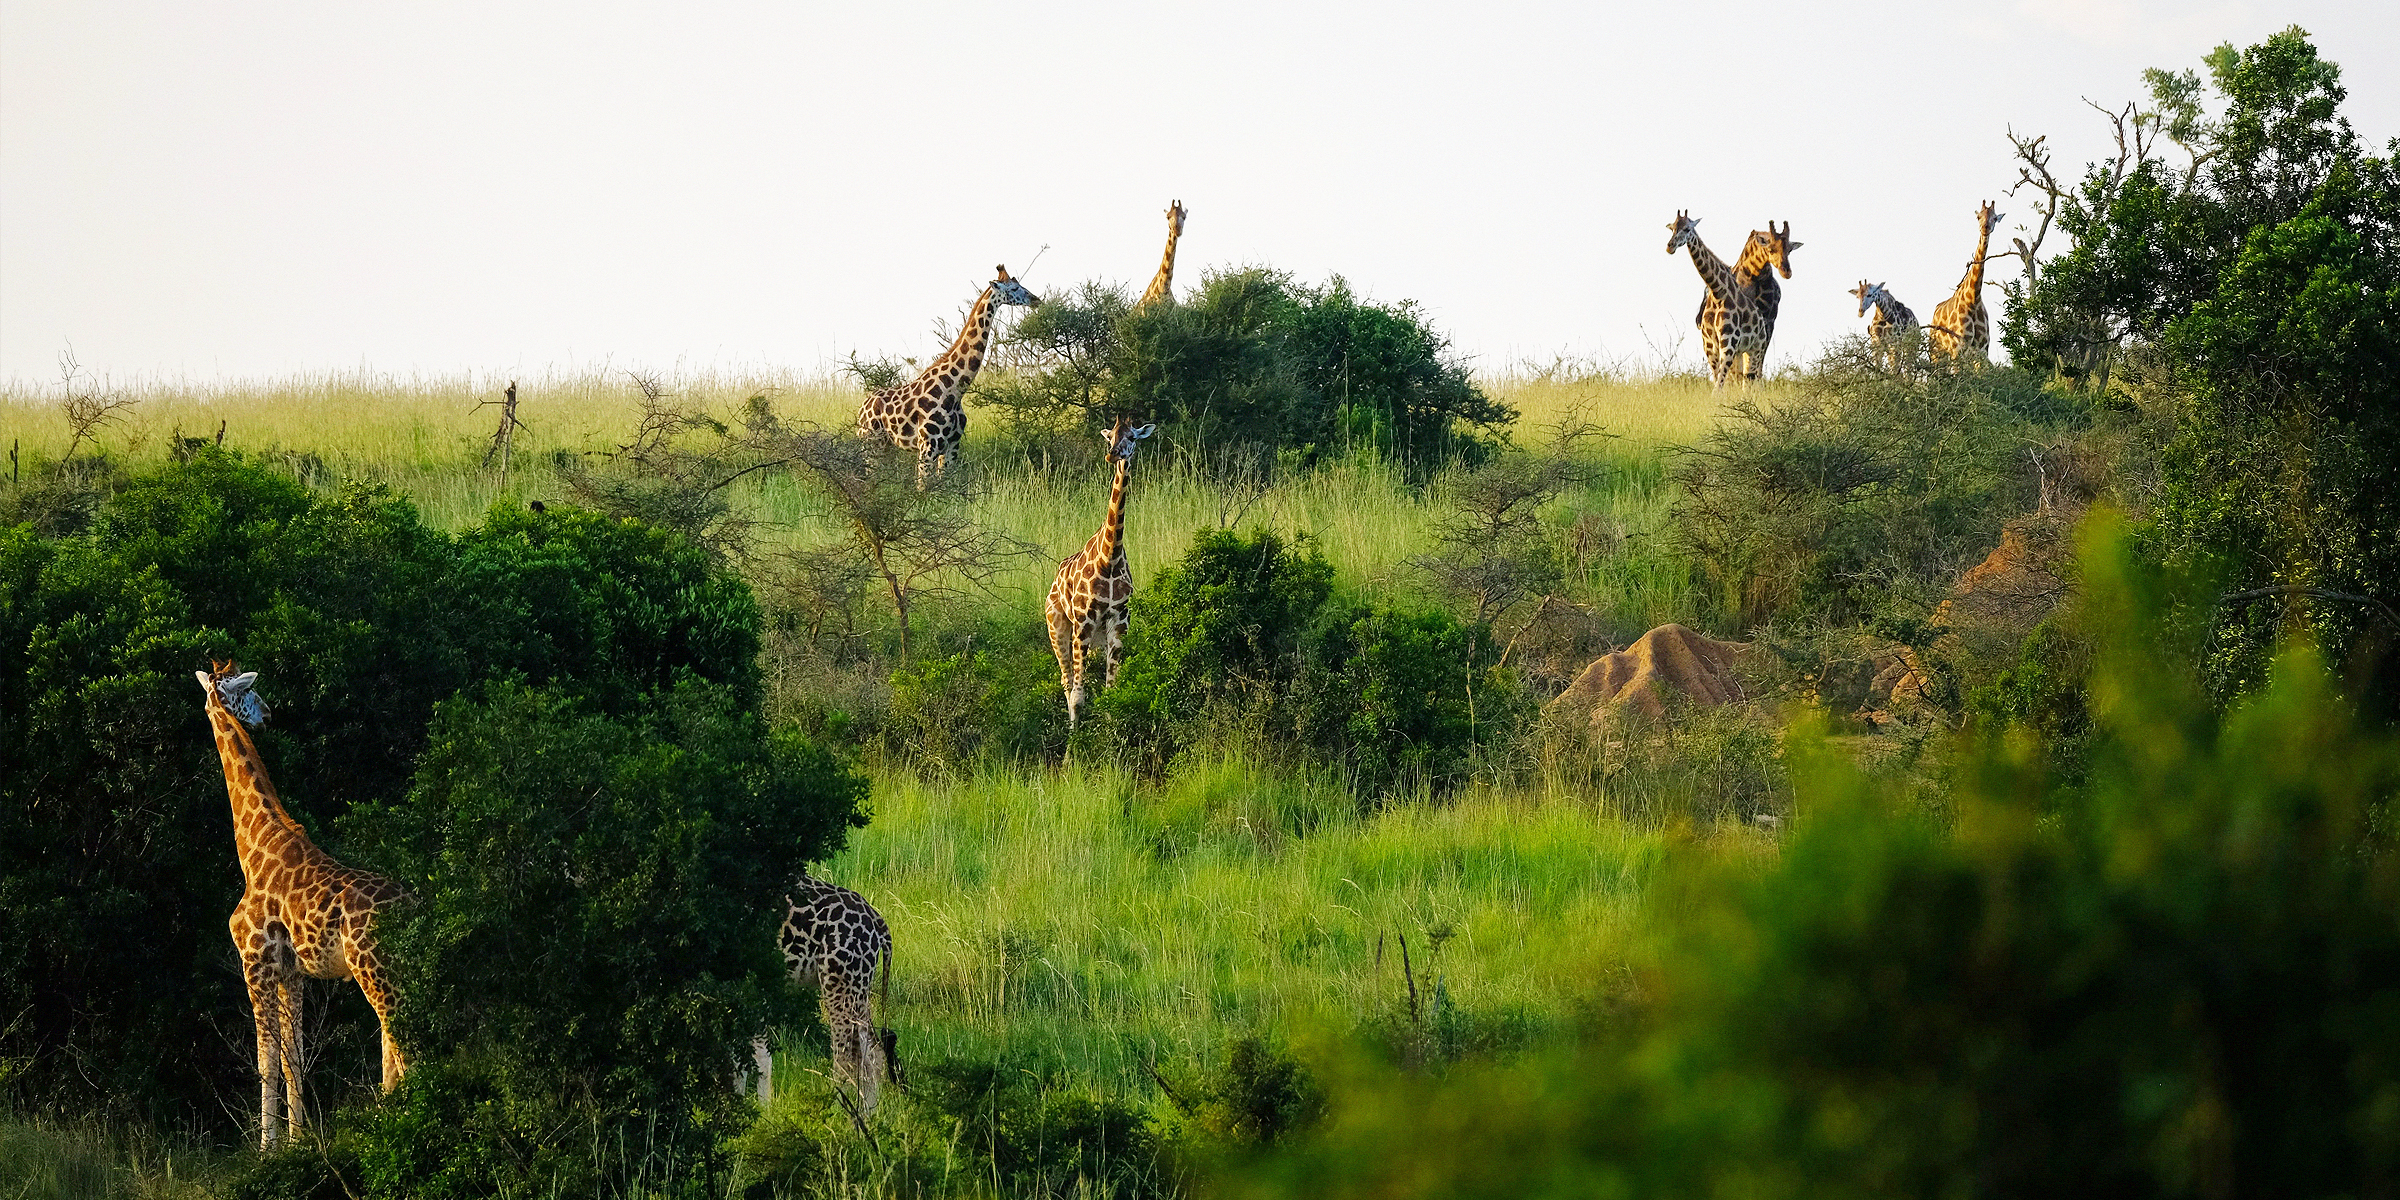 Giraffes in nature | Source: Pexels/Francesco Ungaro